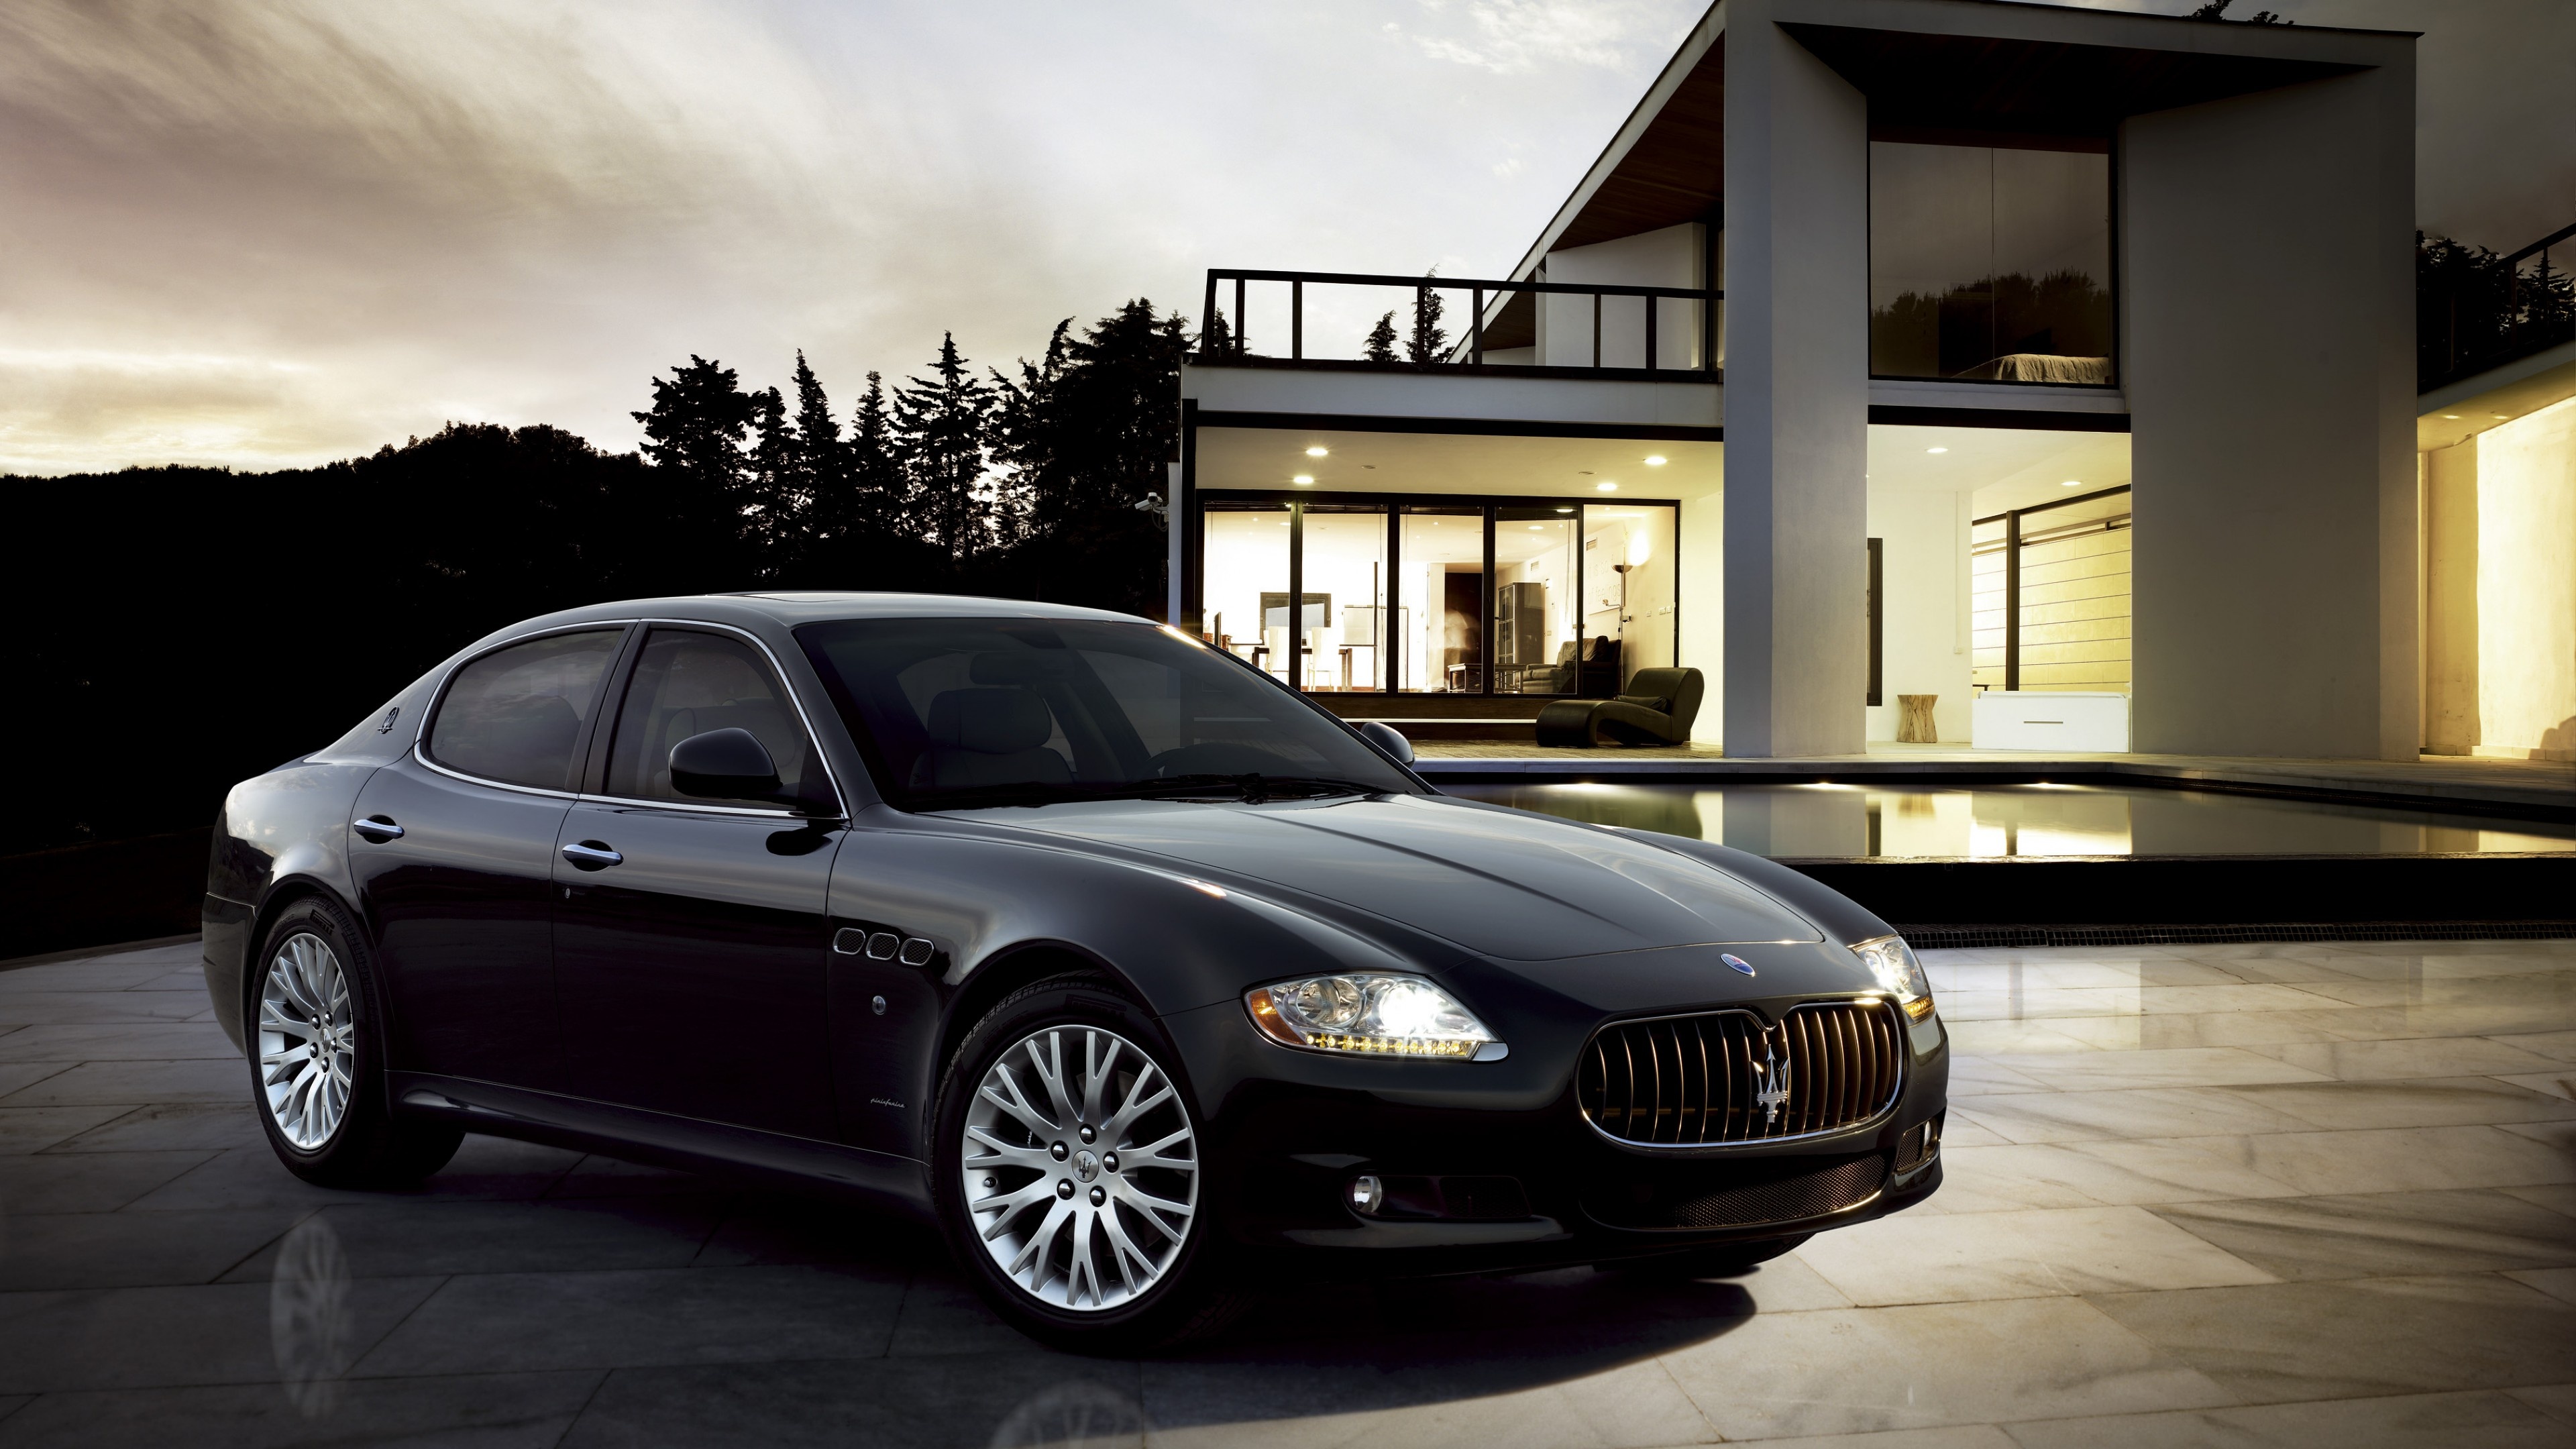 Maserati Quattroporte, Supercar luxury, Sporty front view, Unmatched elegance, 3840x2160 4K Desktop